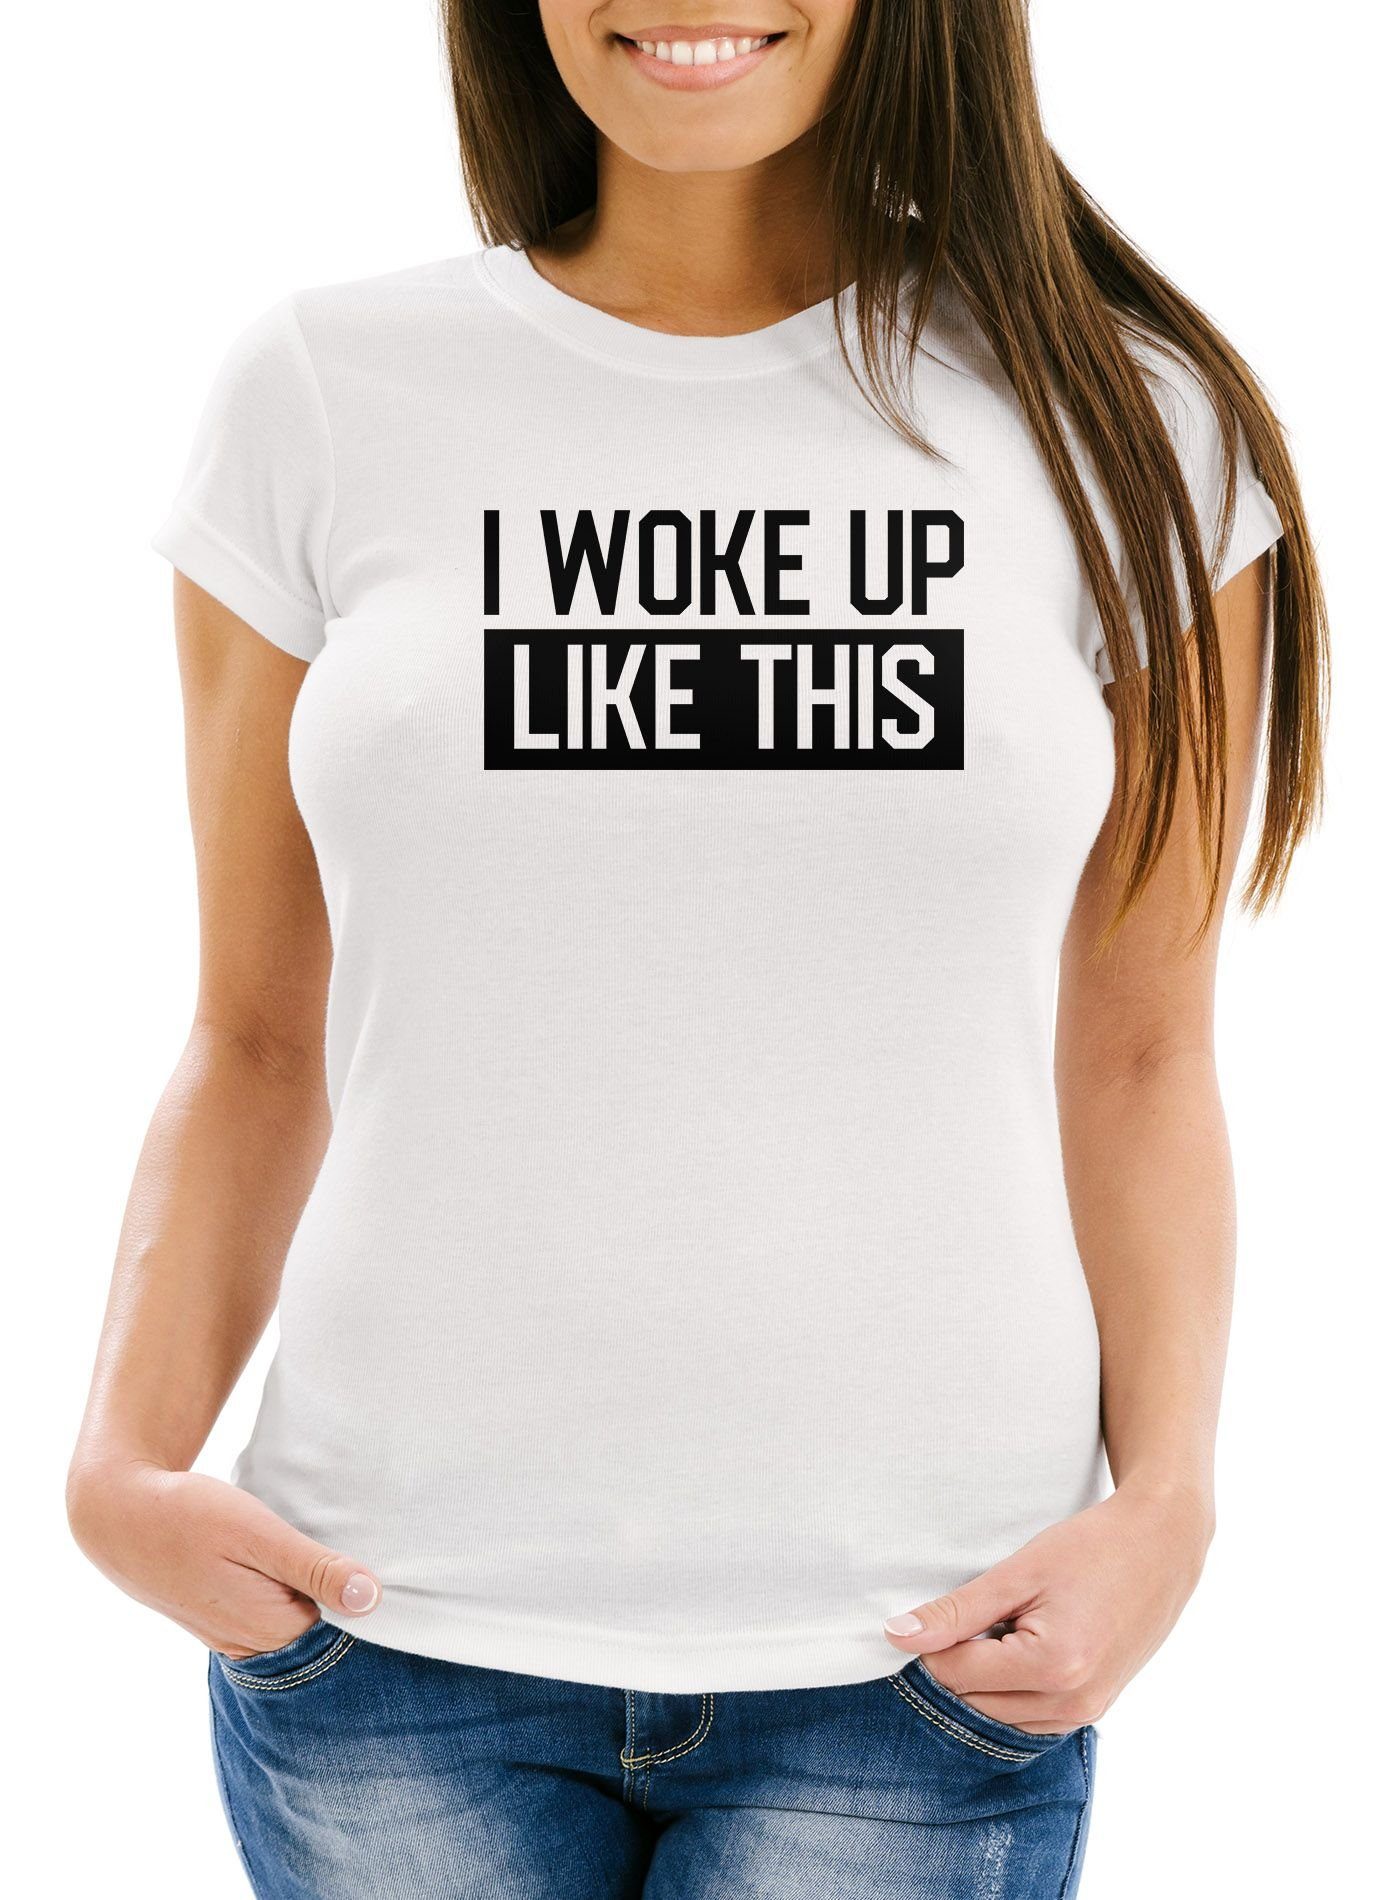 MoonWorks Print-Shirt Damen T-Shirt I woke up like this Fun-Shirt Statement Spruch Quote Slim Fit Moonworks® mit Print